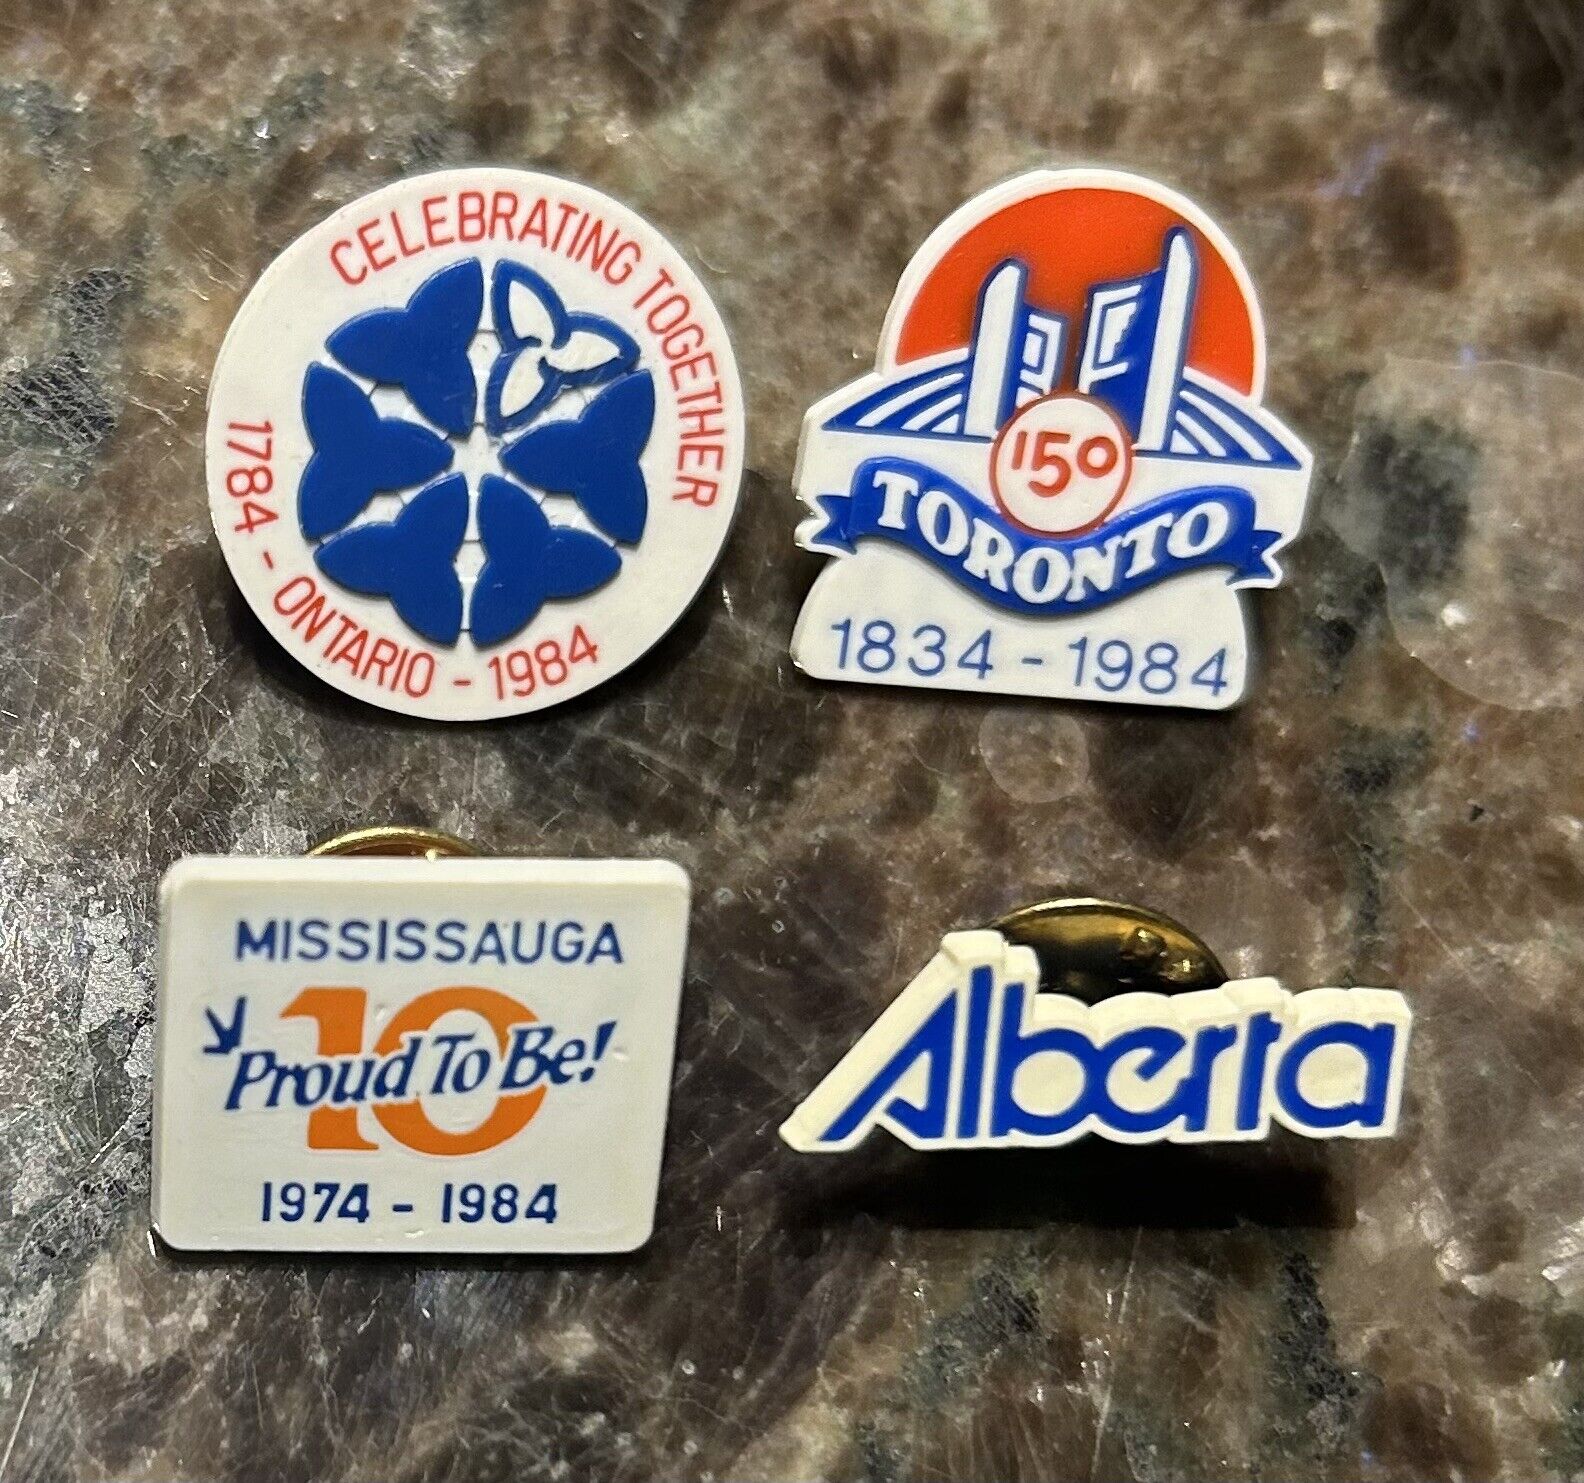 4 Vintage Canada Pins Celebrating Ontario, Toronto, Alberta And Mississauga